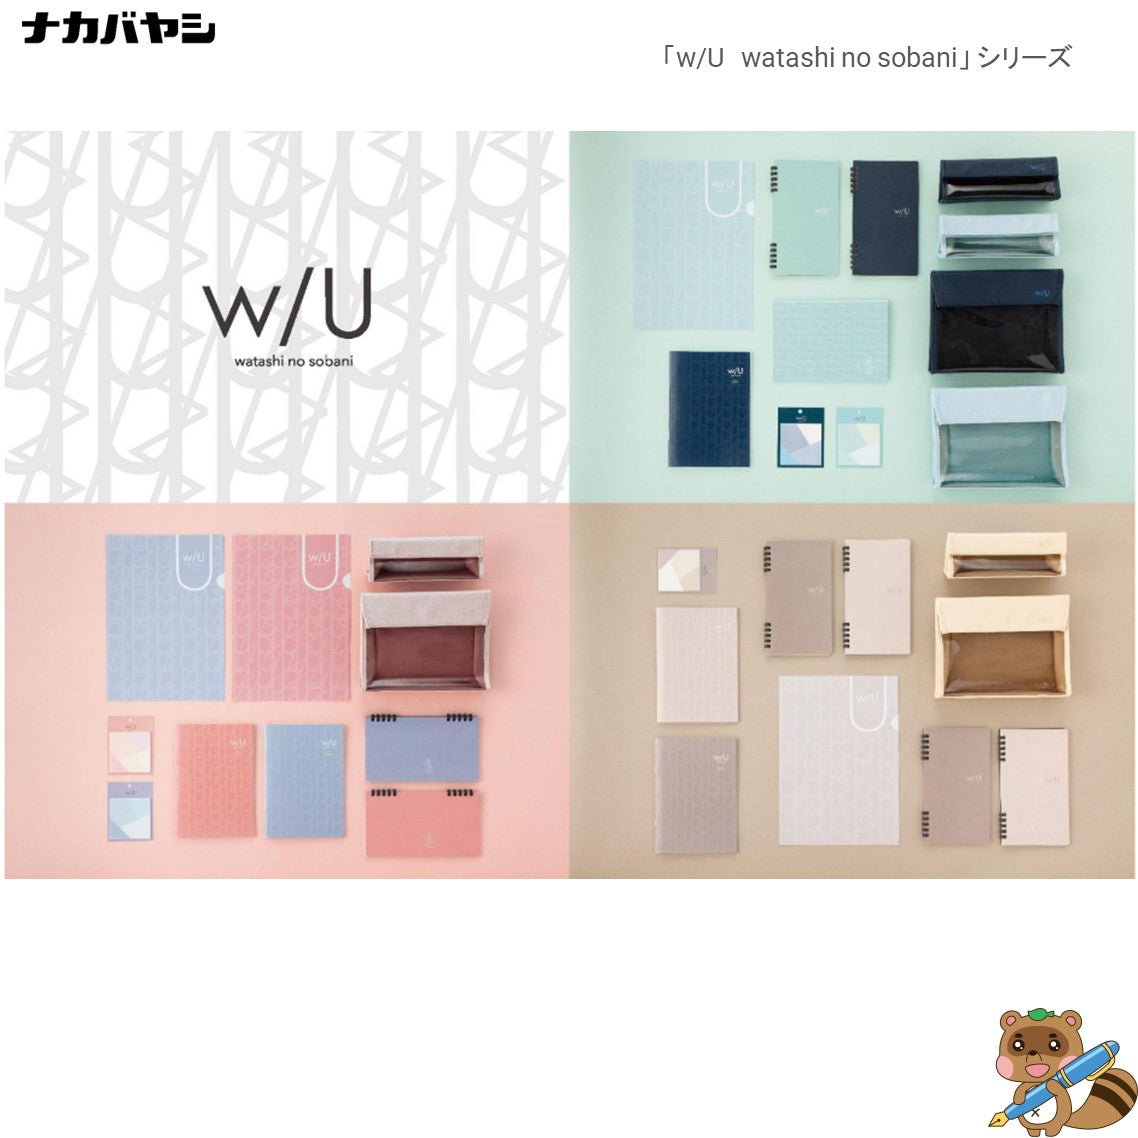 ｗ/U -watashi no sobani-　ペンケース
WU-PCN01